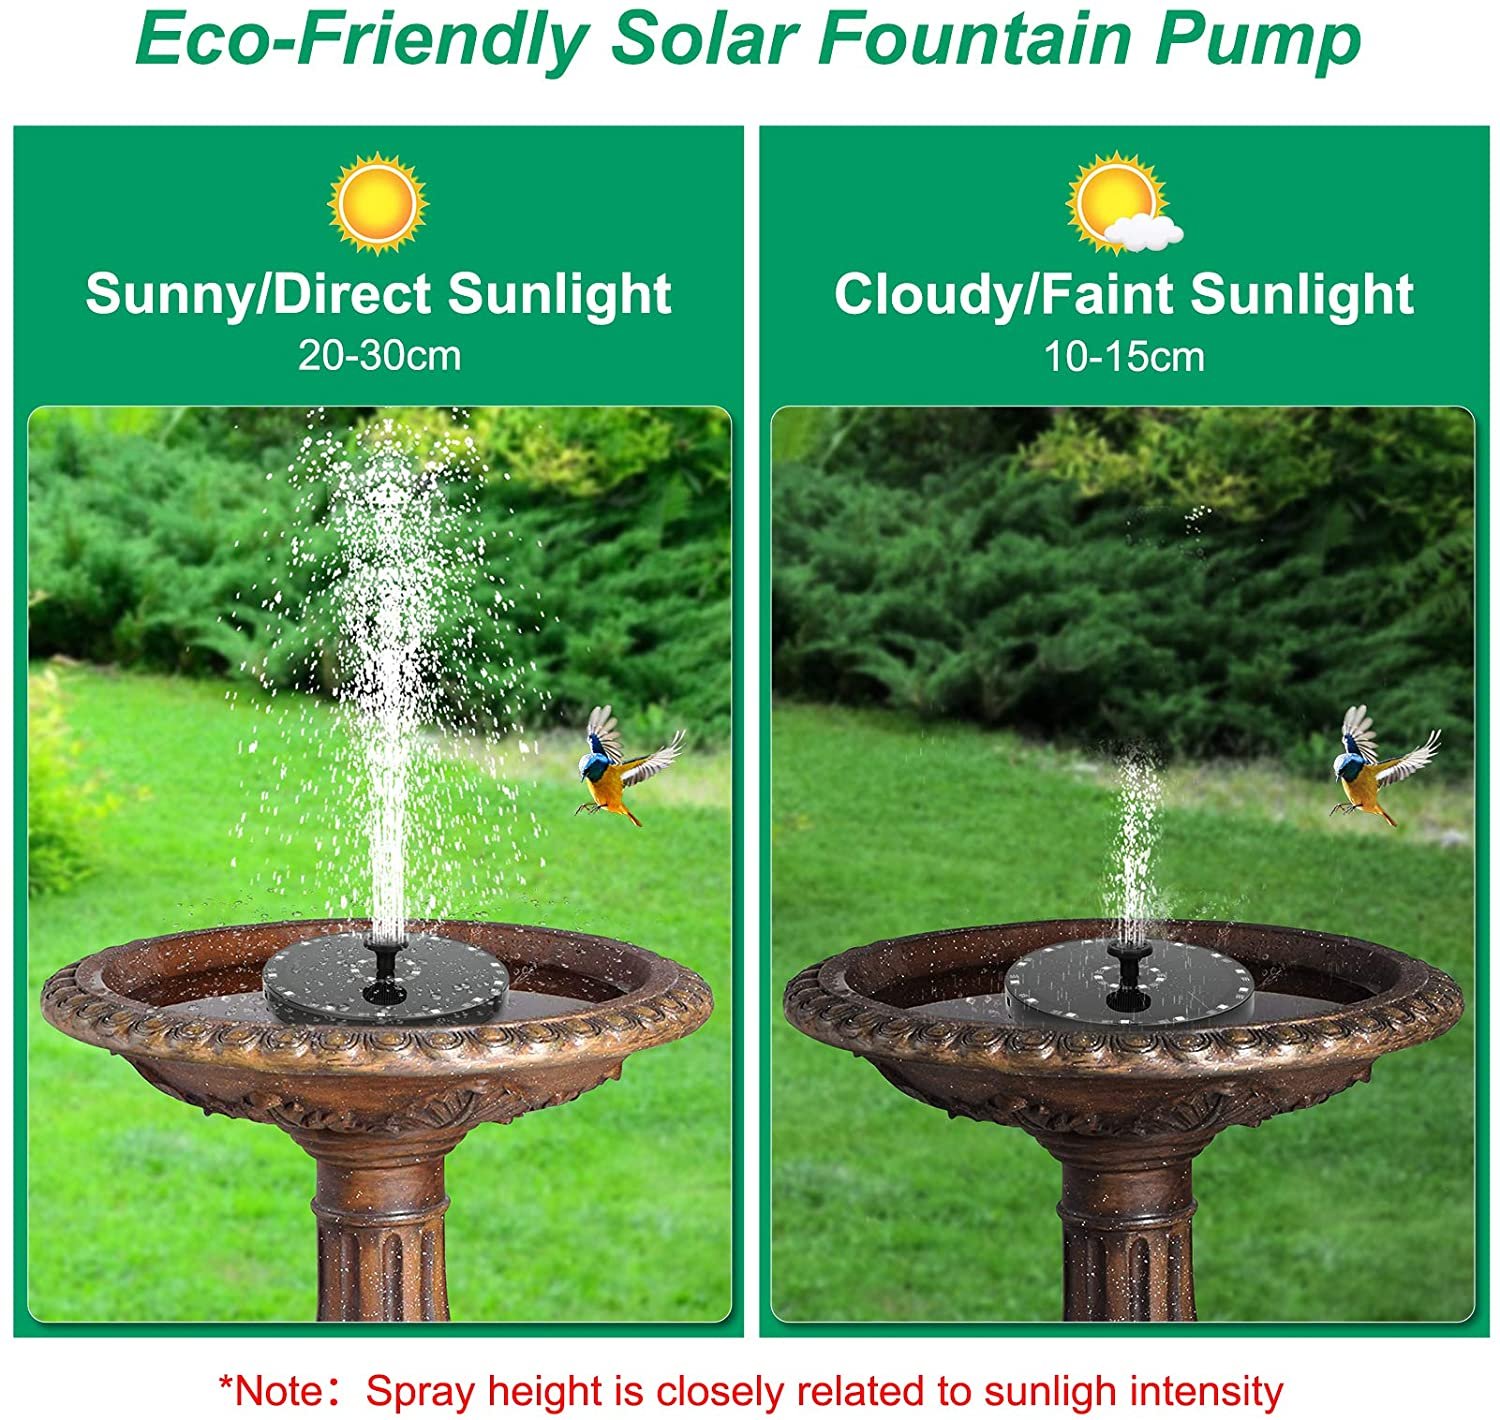 Eco-Friendly Solar Fountain Pump